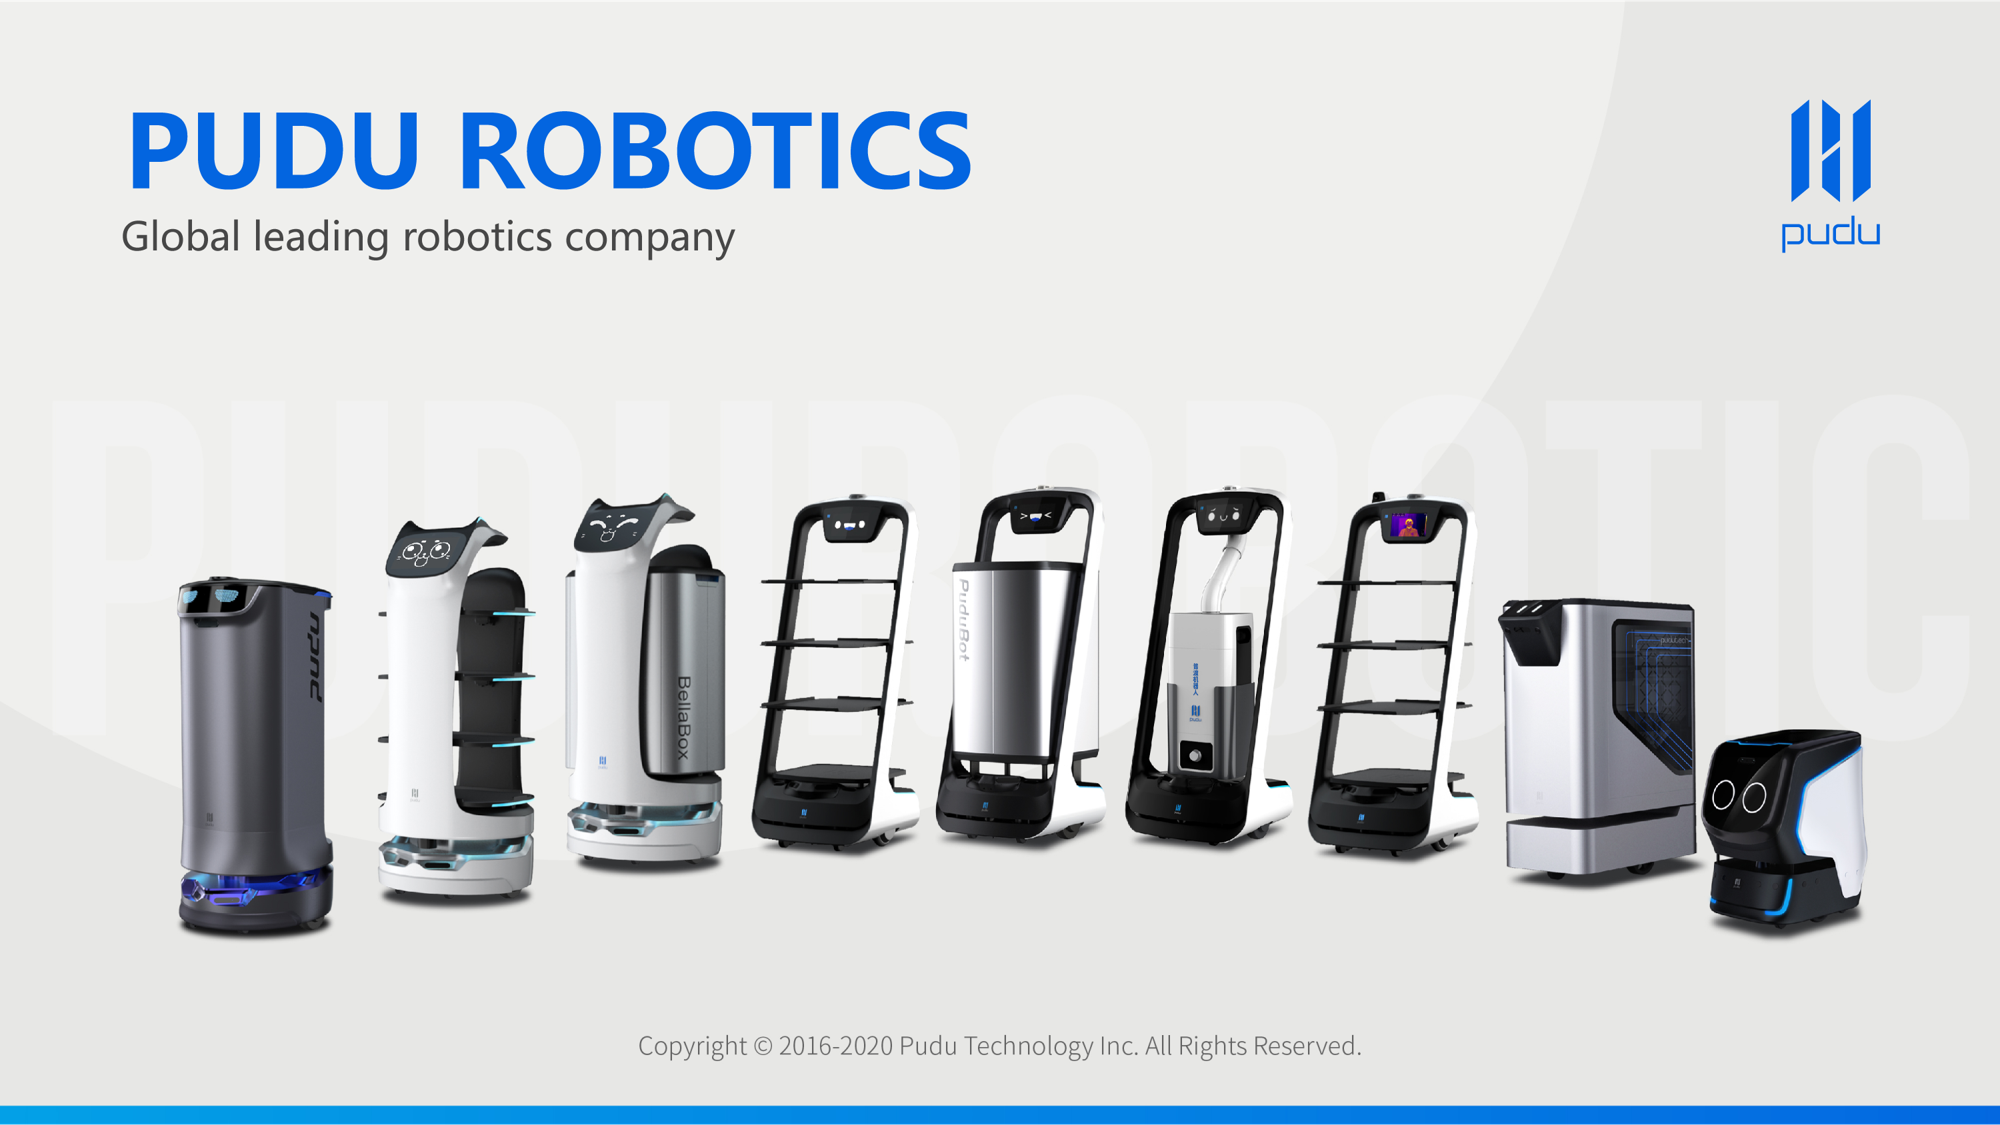 Pudu Robotics raises over $15M for indoor delivery robots